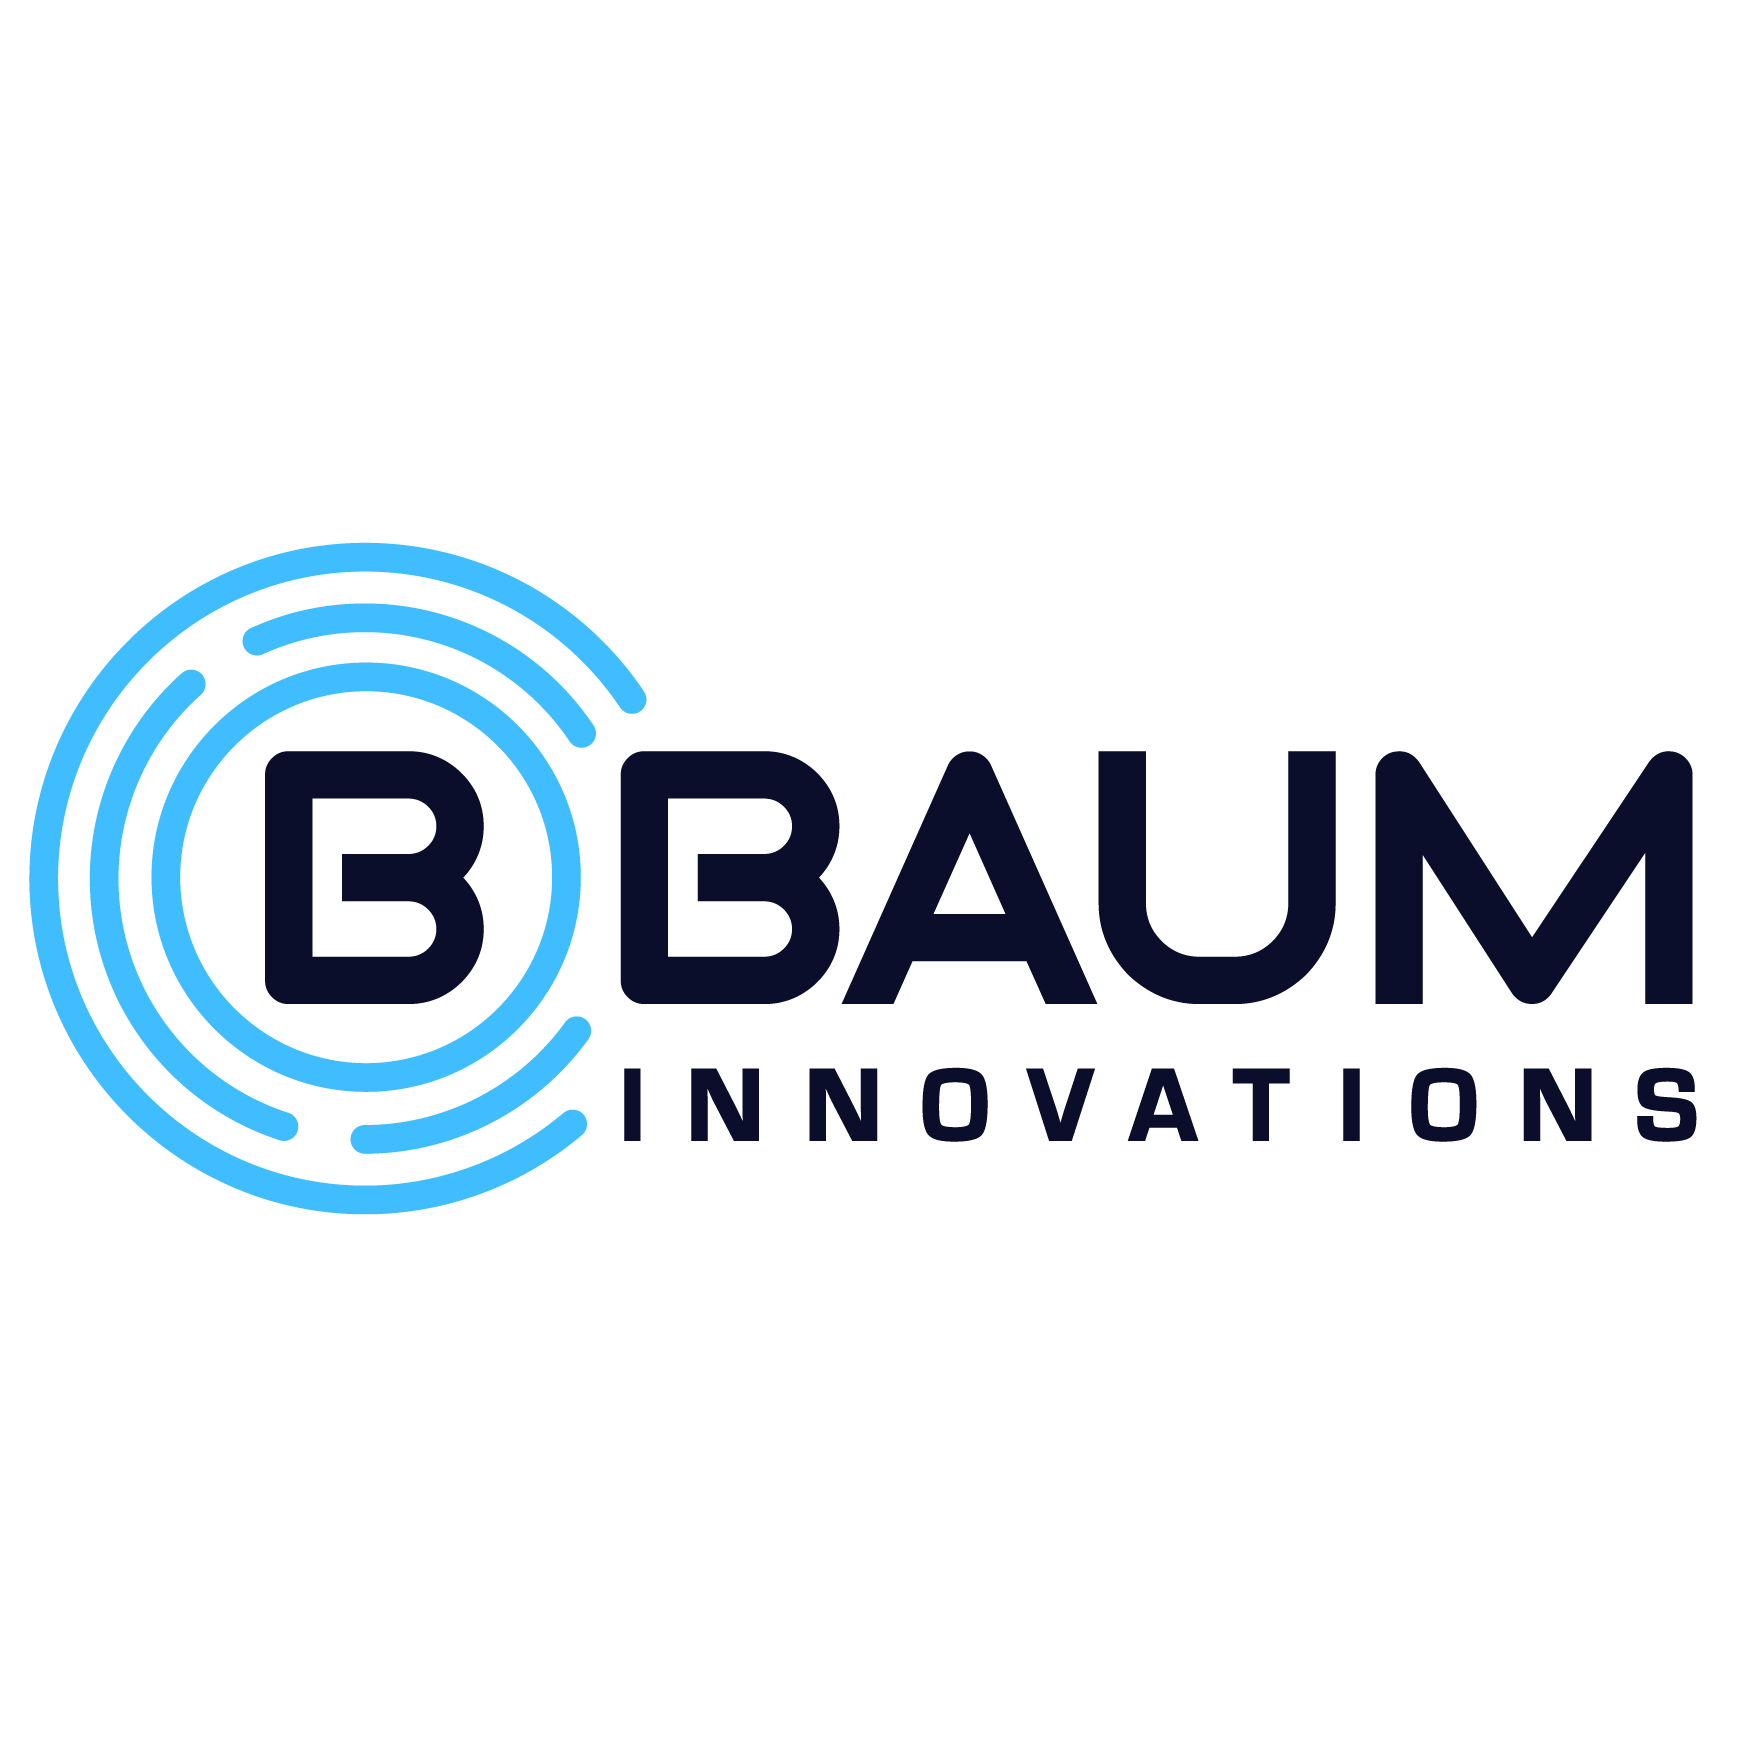 B Baum Innovations